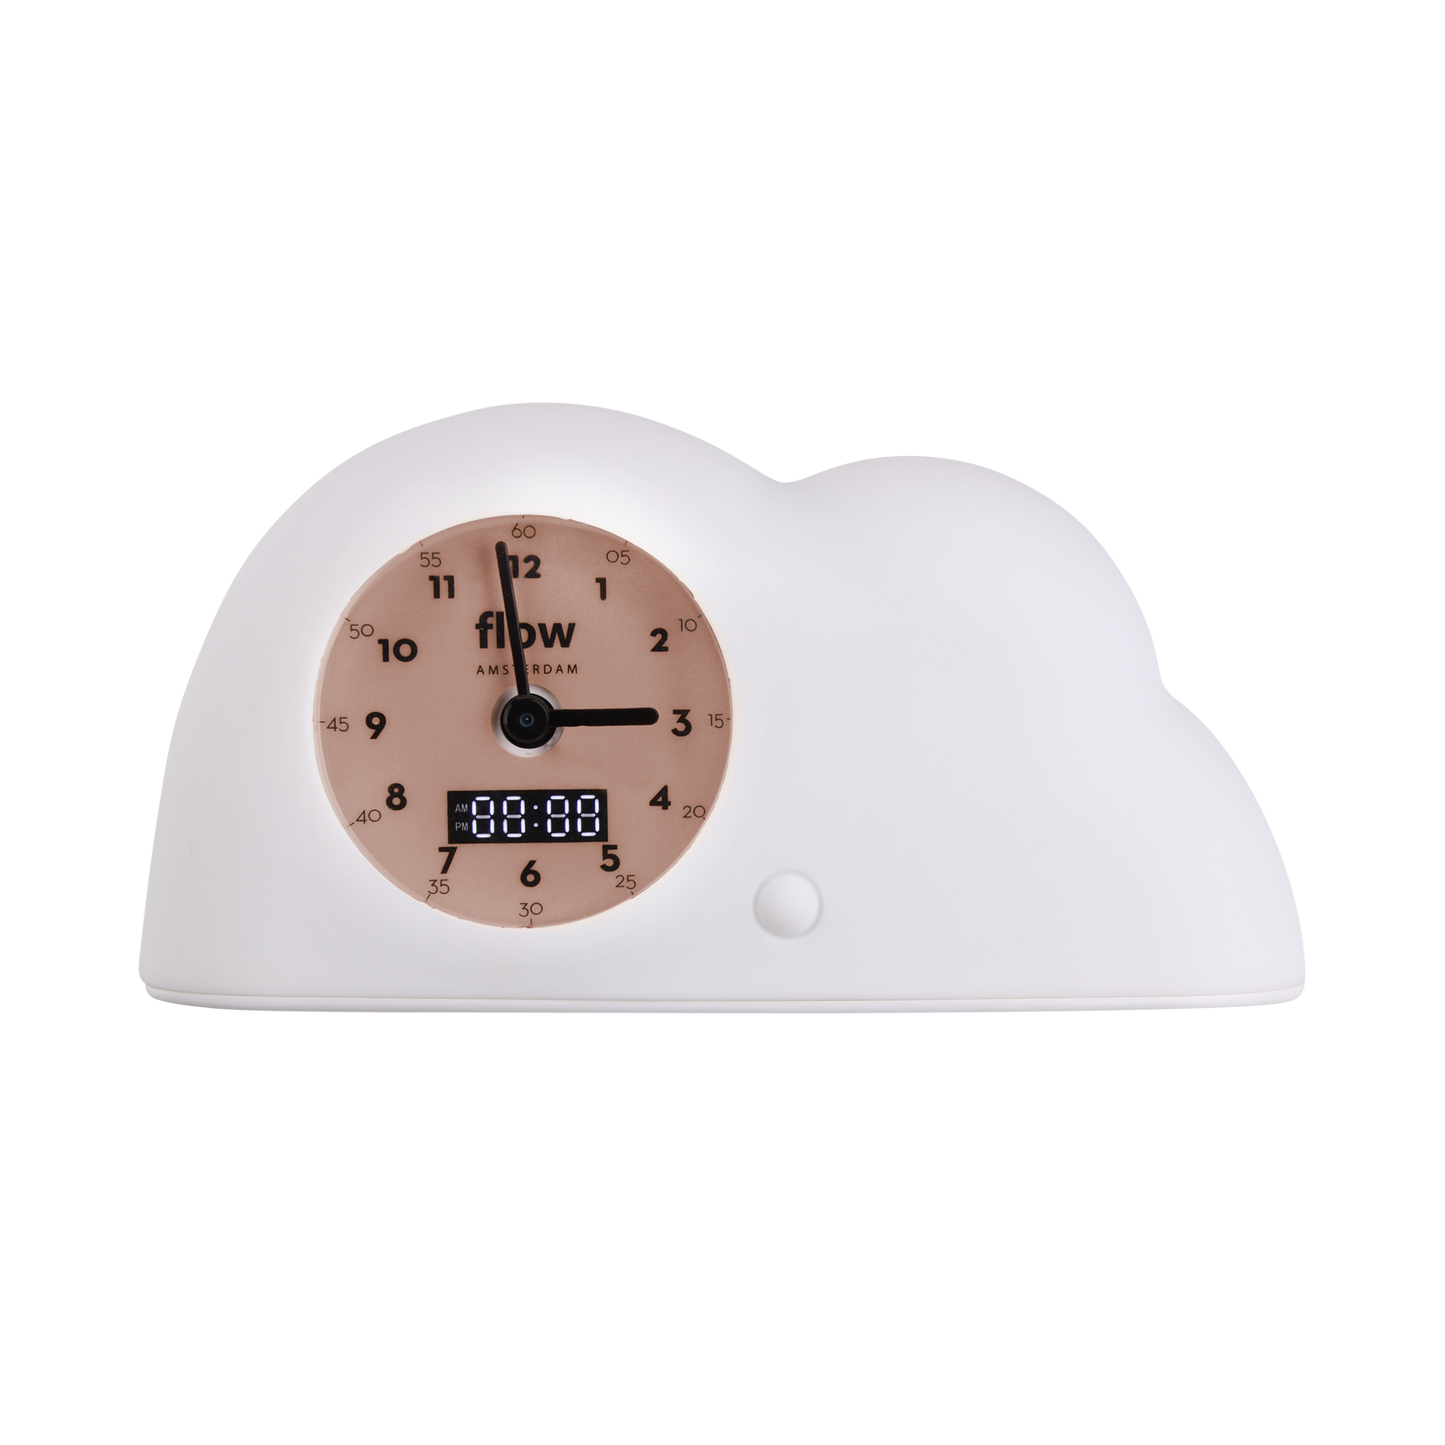 Cloud – Sleep trainer